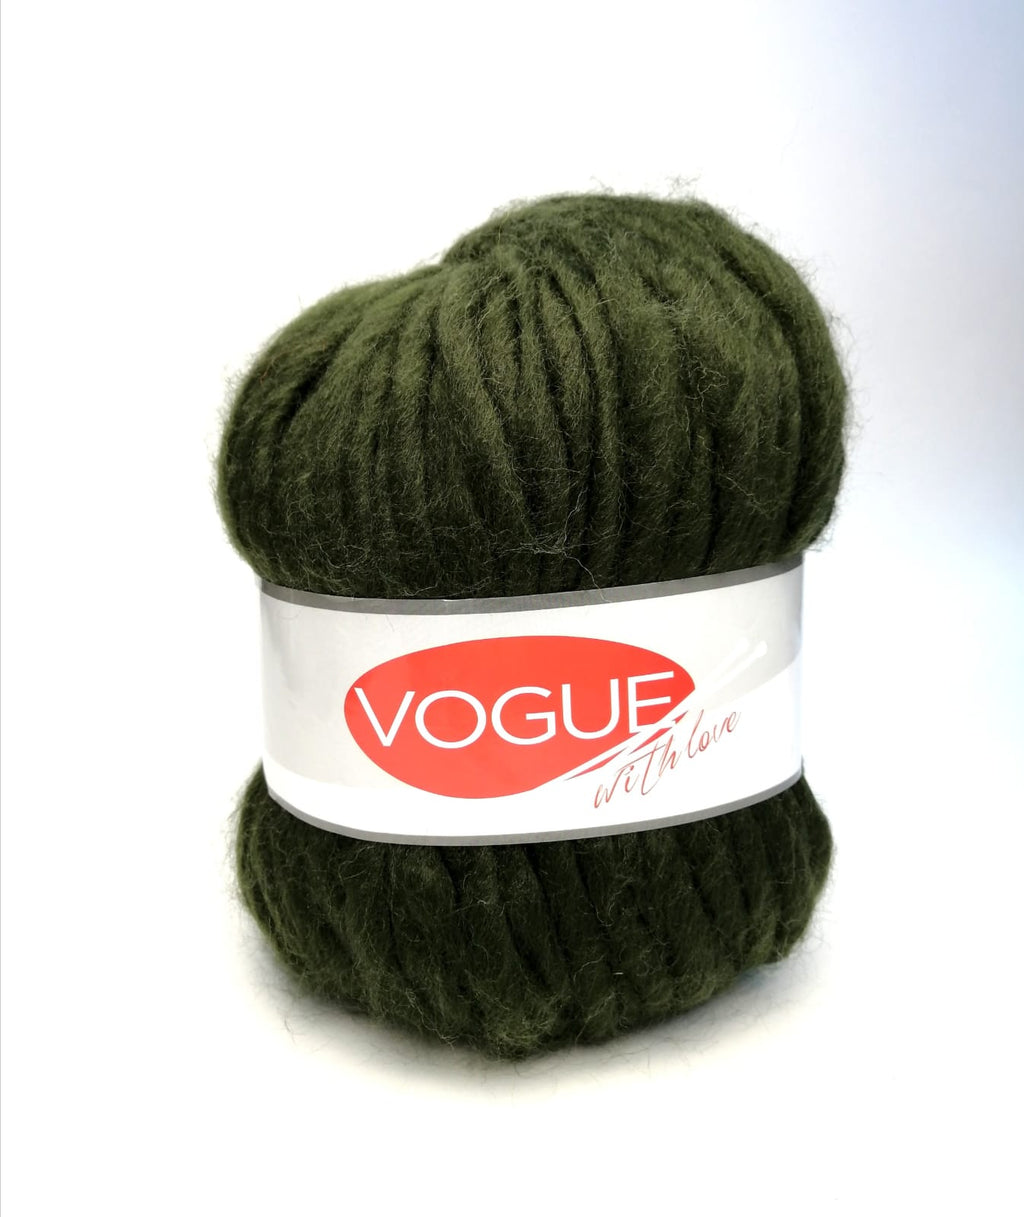 Vogue Yün - Saf Yün - Haki Yeşil